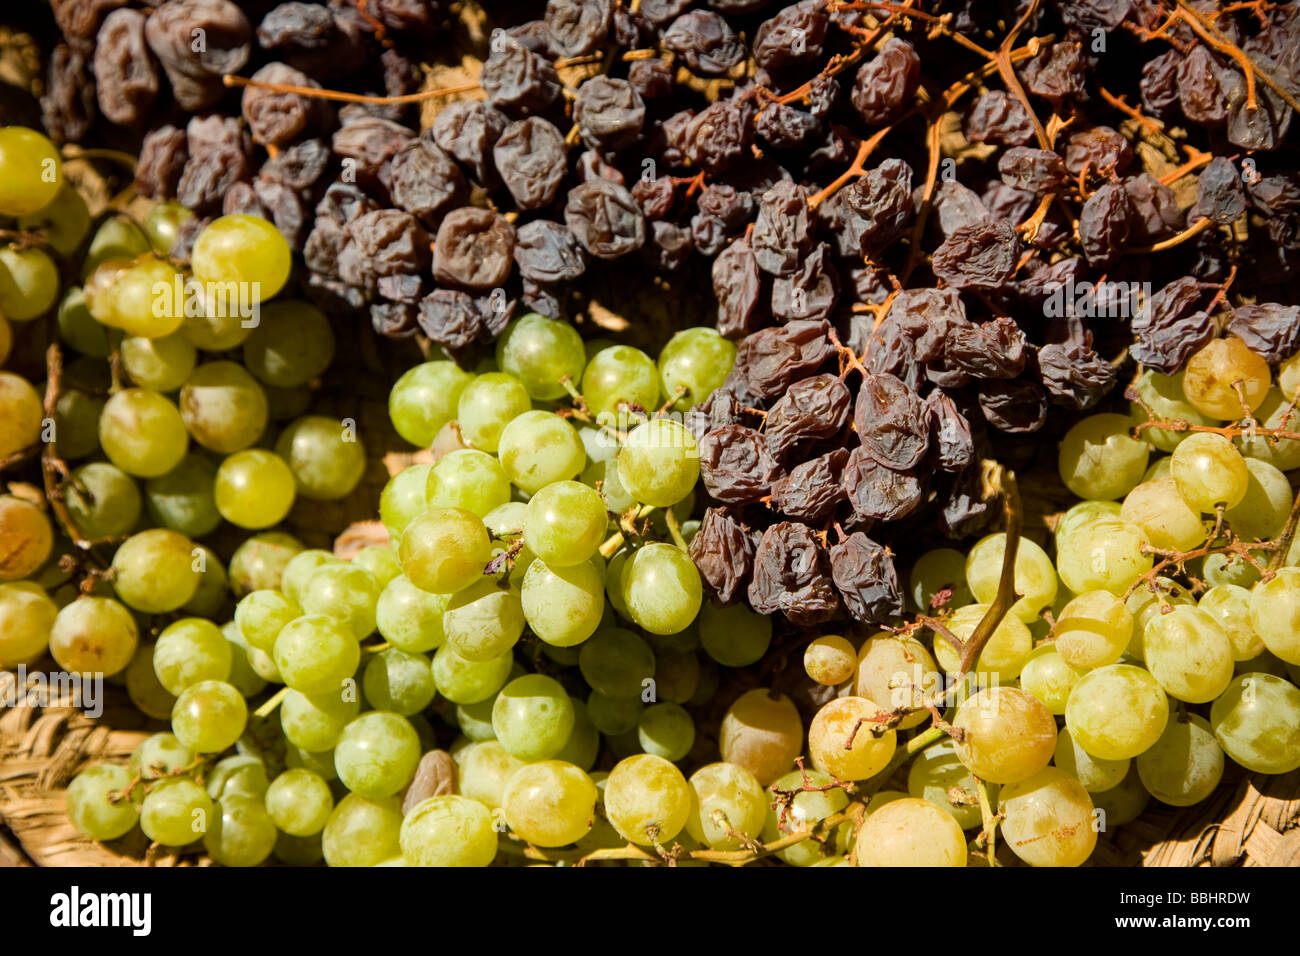 grapes raisin contrast wine sun fruit Andalusia moscatel vintage harvest sweet wine Stock Photo